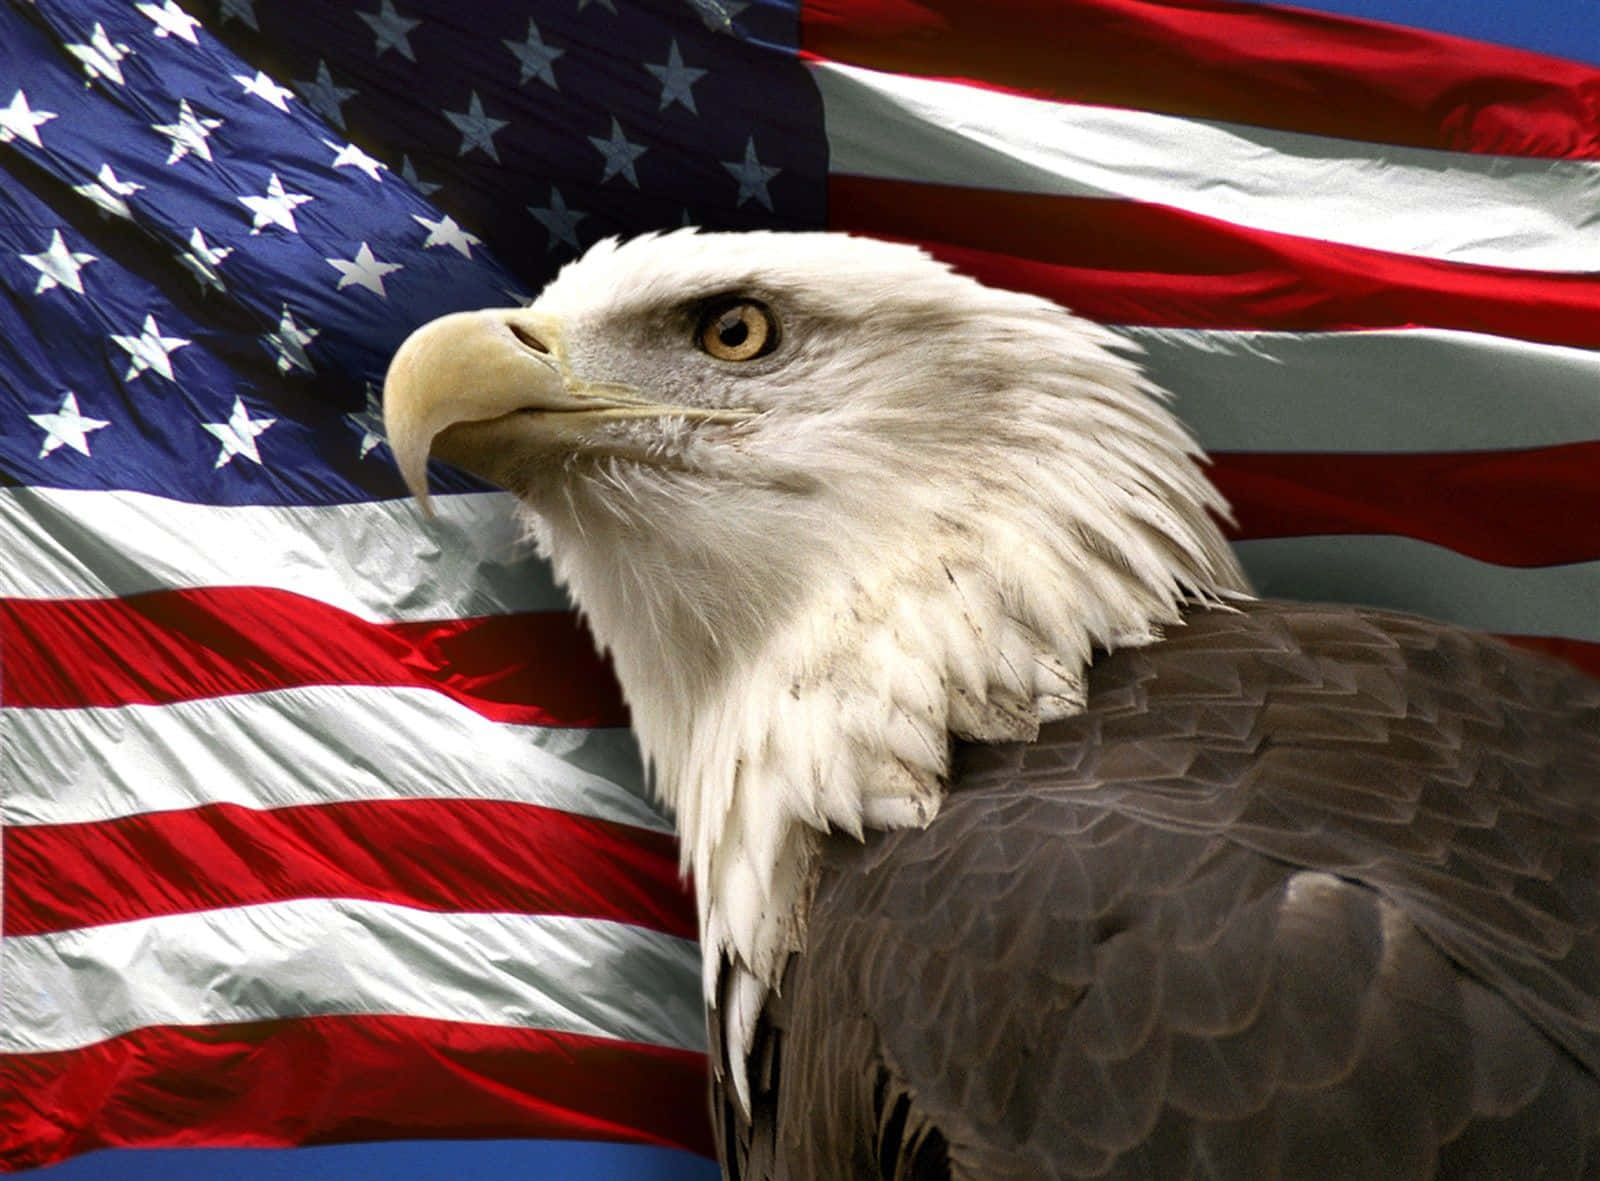 american eagle background